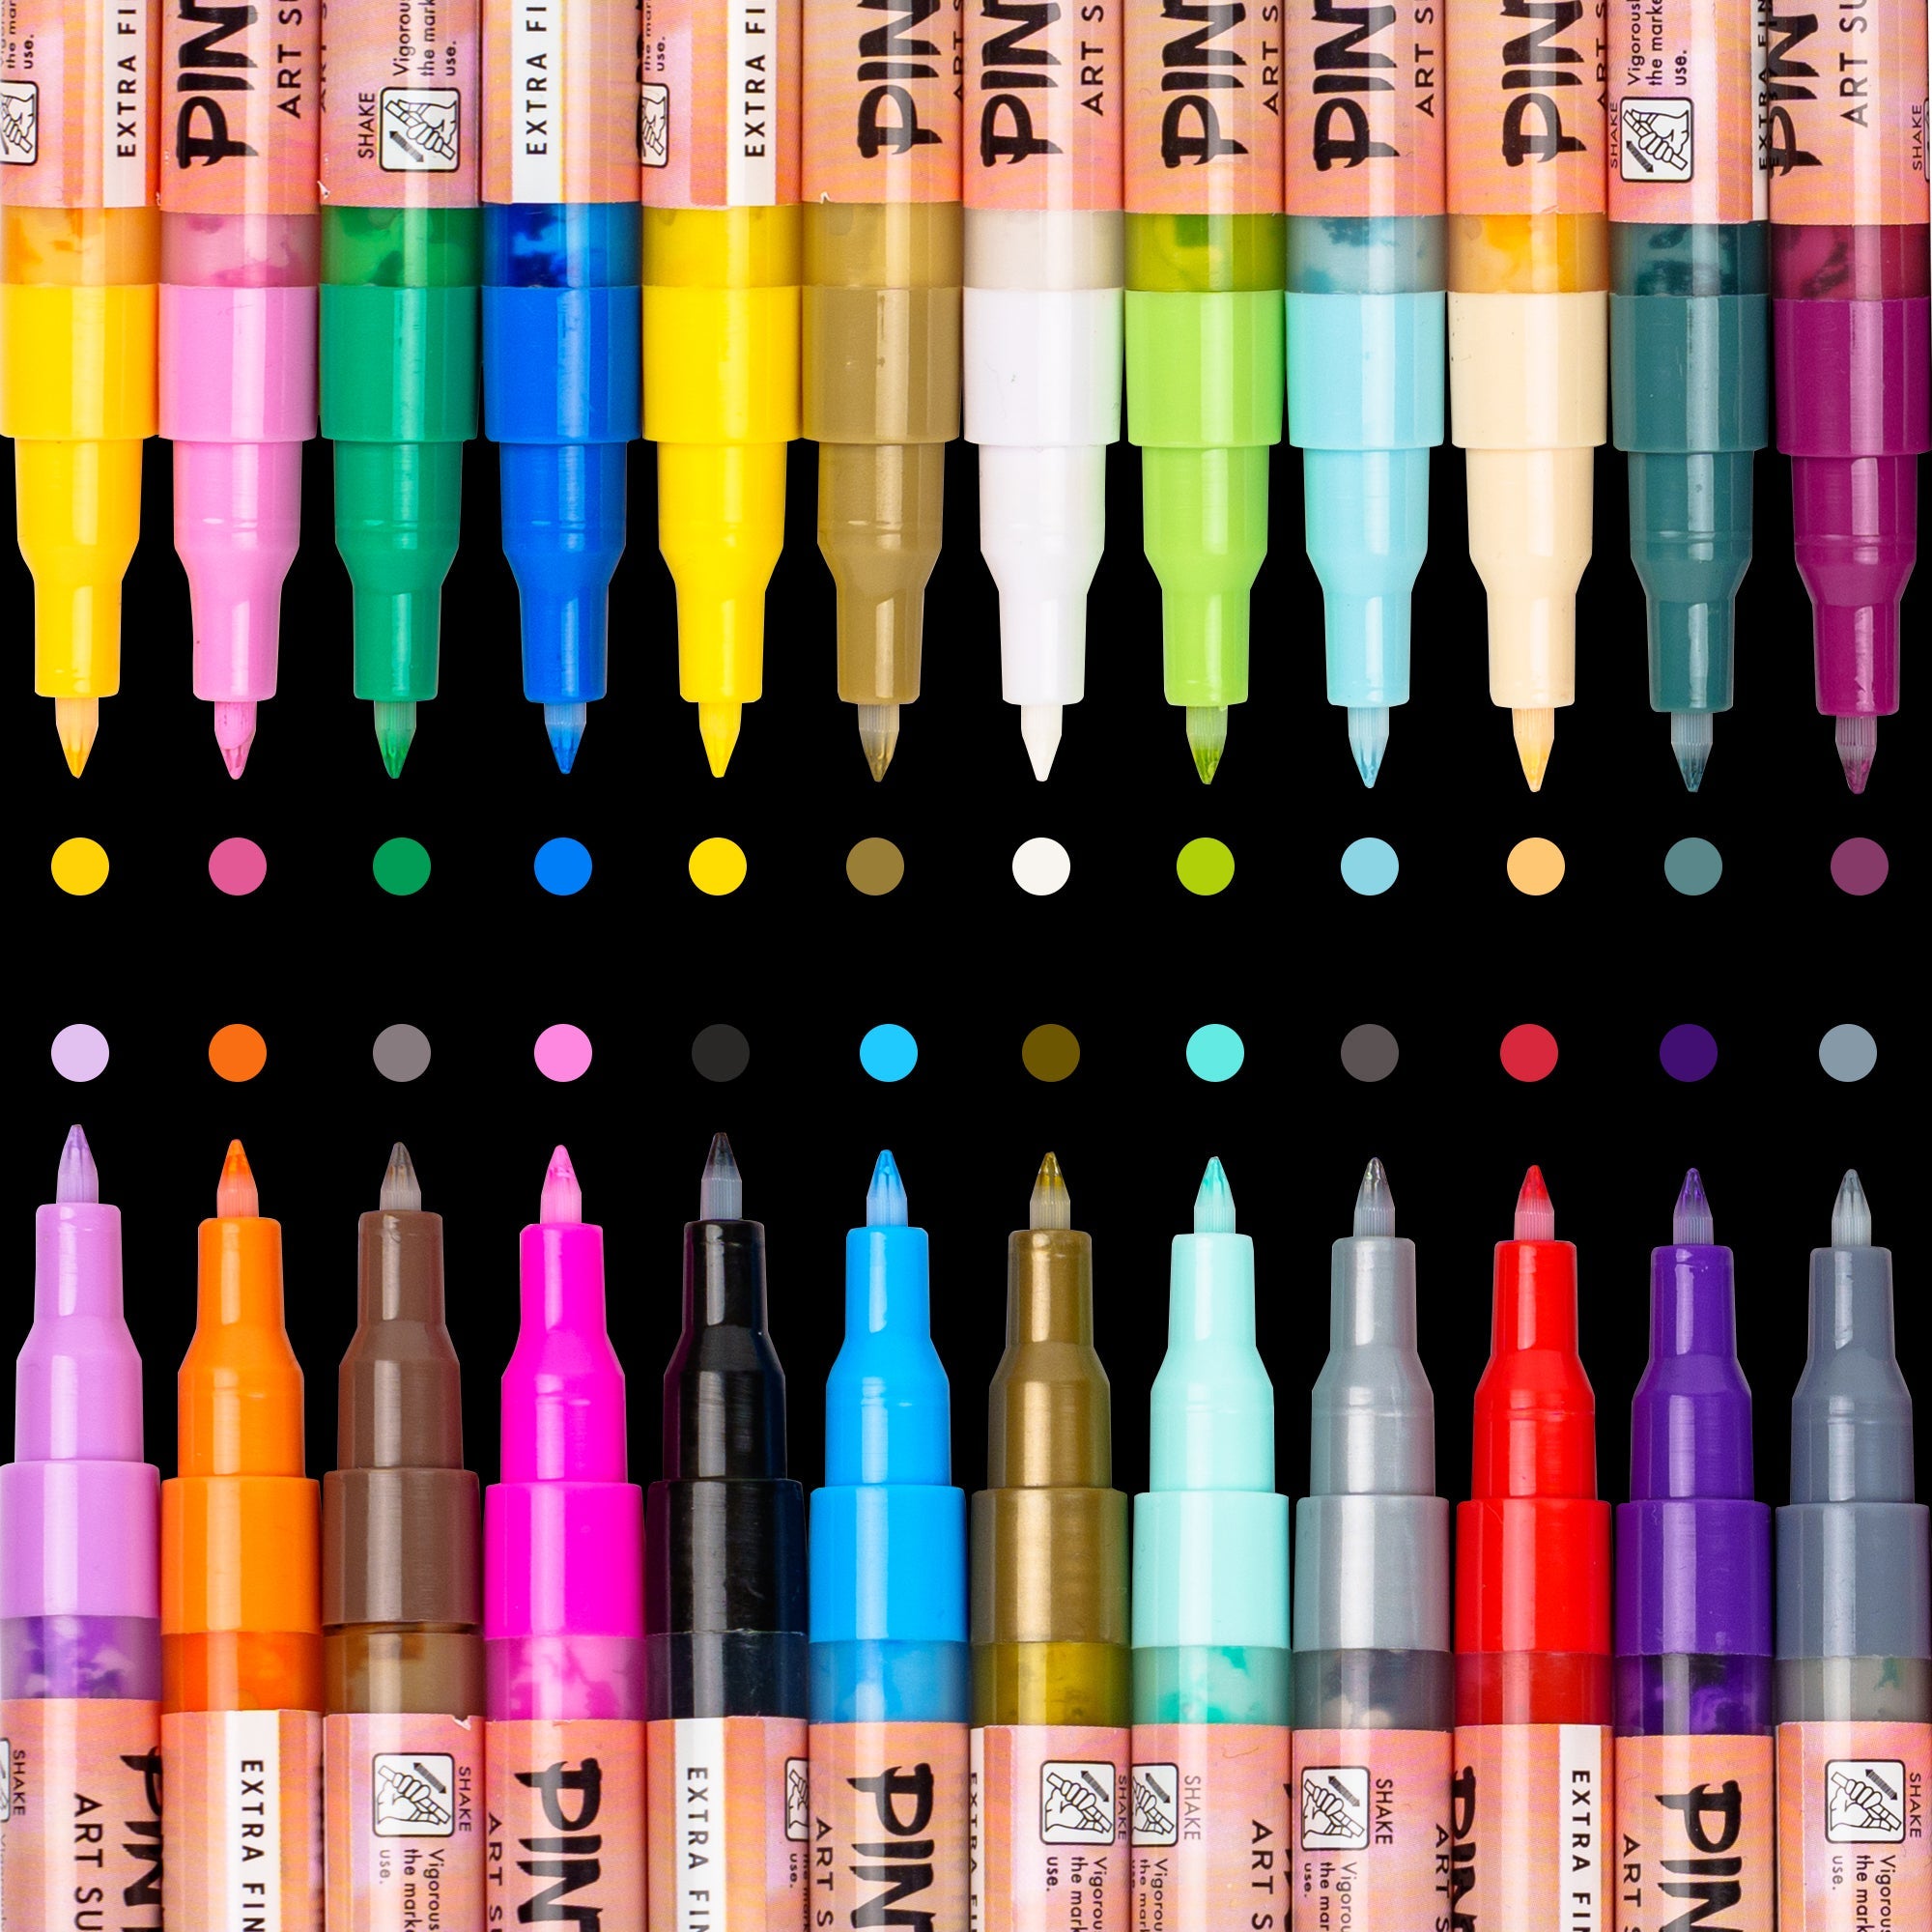 PINTAR Pastel Acrylic Paint Pens - Medium Point Tip Brush Pens